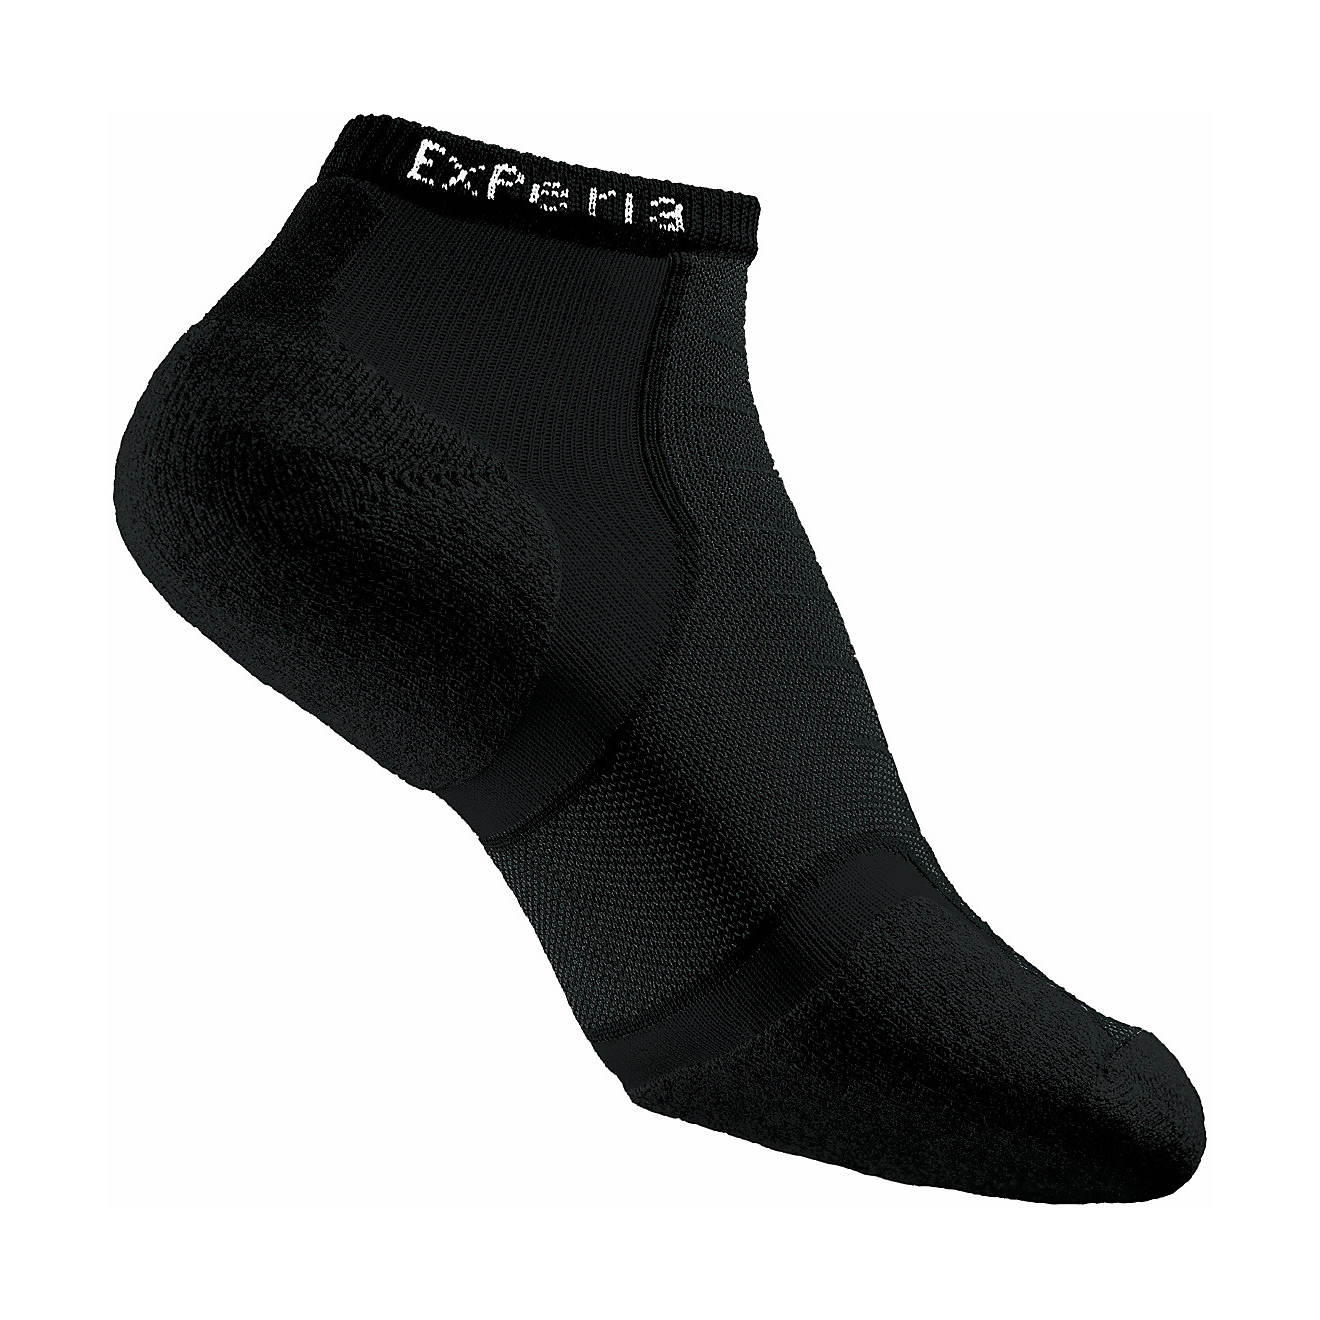 Thorlos Mens Experia Thin Padded Running Low Cut Socks Socks 